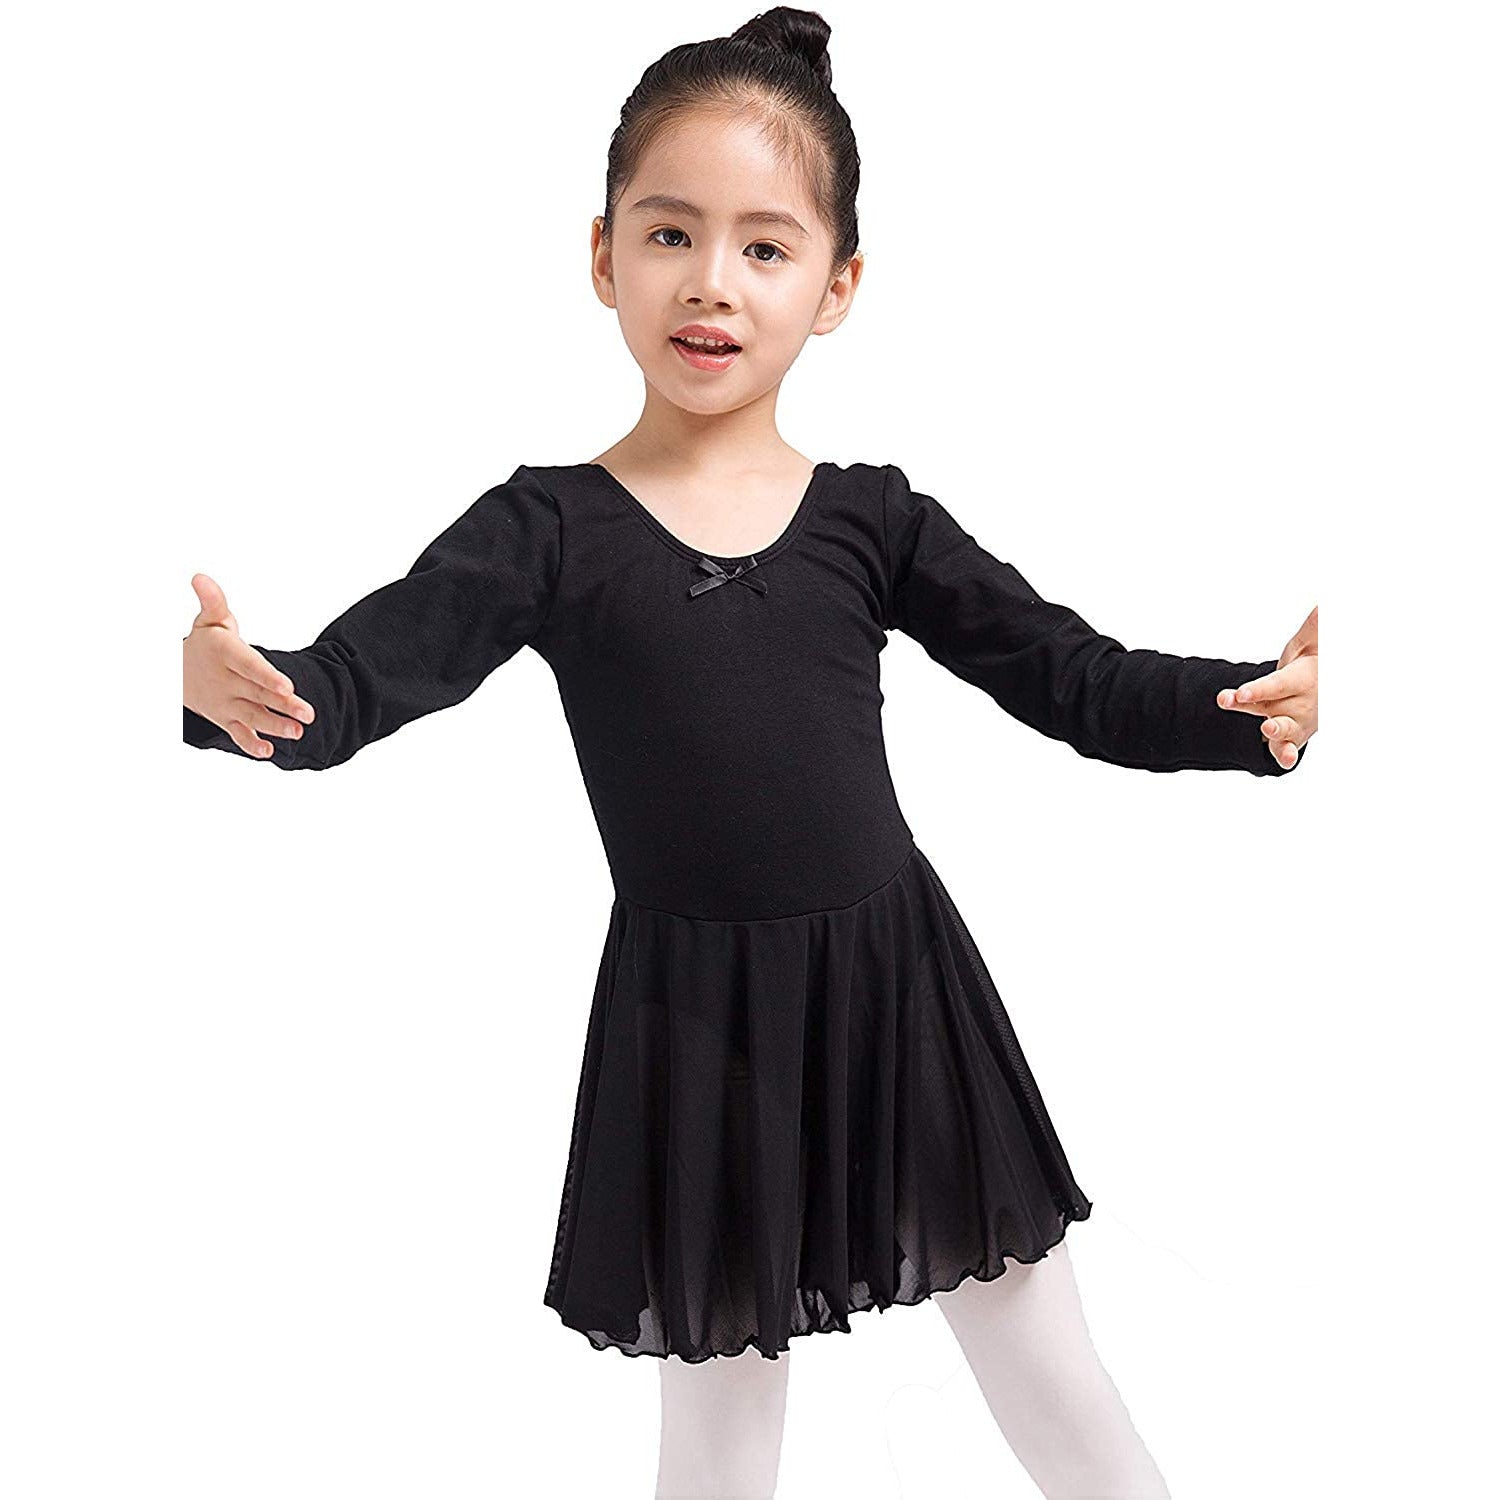 Dancina Girls Skirted Ballet Leotard Dance Dress Long Sleeve Cotton Front Lined in Black